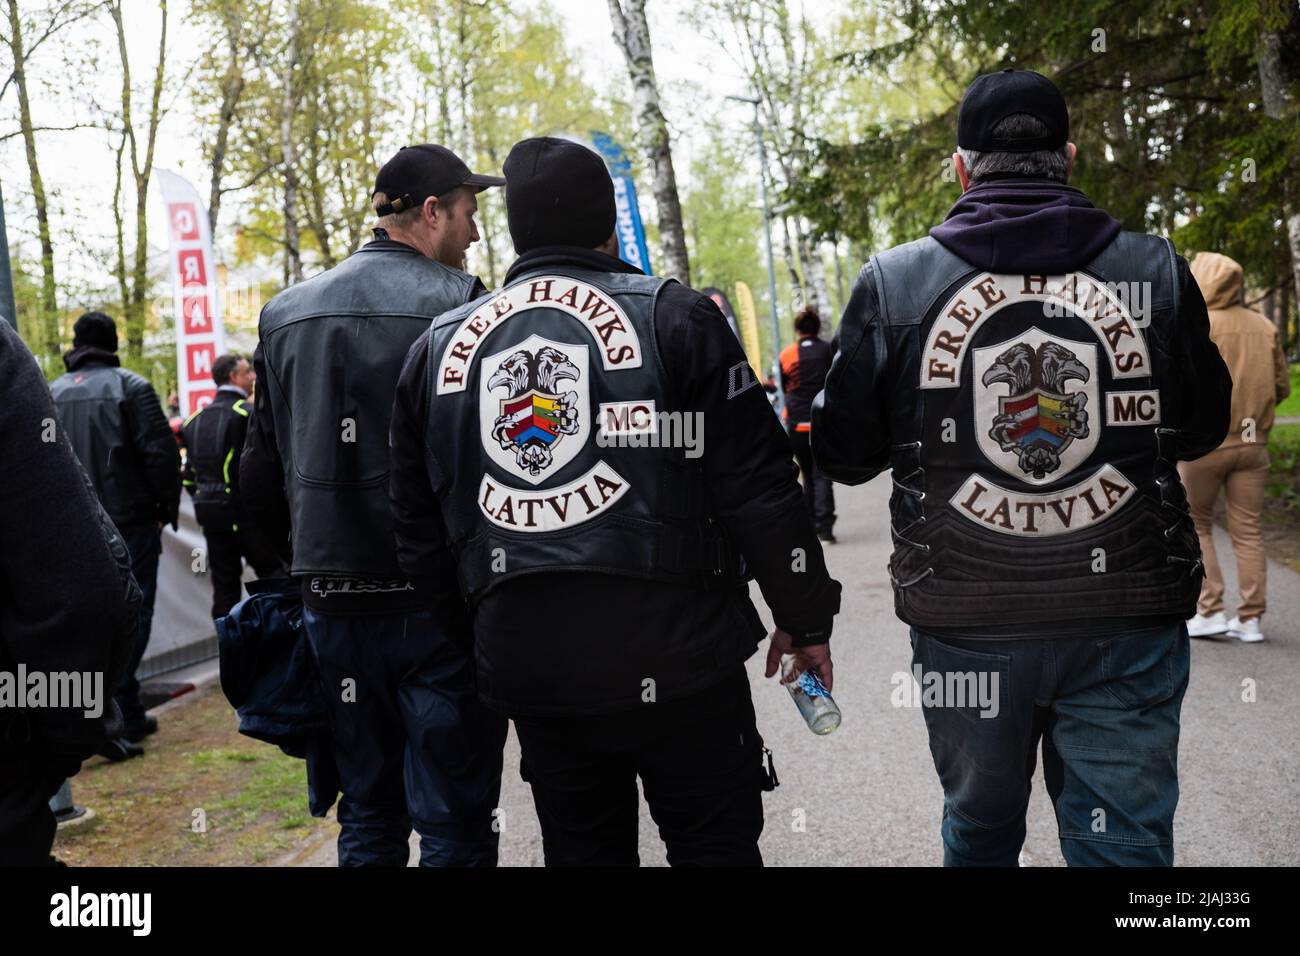 Estonian Motorcycle Season Opening. Men with 'Free Hawks Latvia' leather jackets. Motorcyclist gathering parade or rally. Stock Photo